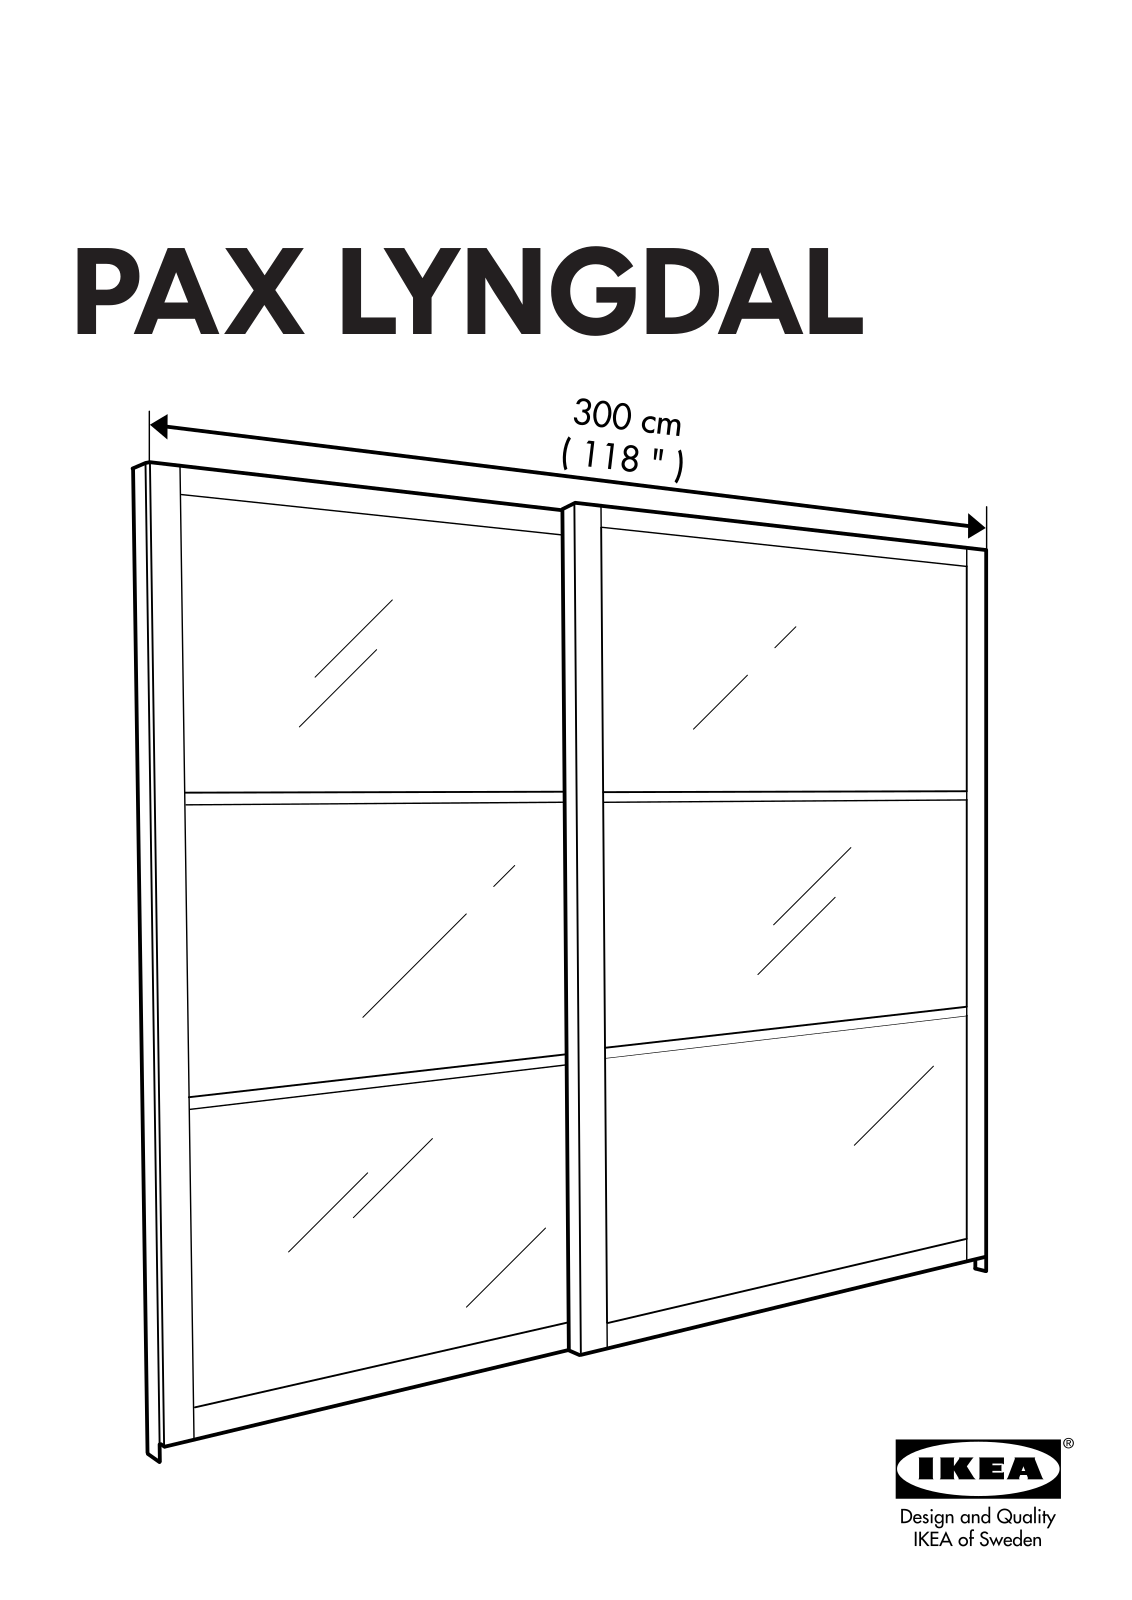 IKEA PAX LYNGDAL SLIDING DOORS Assembly Instruction